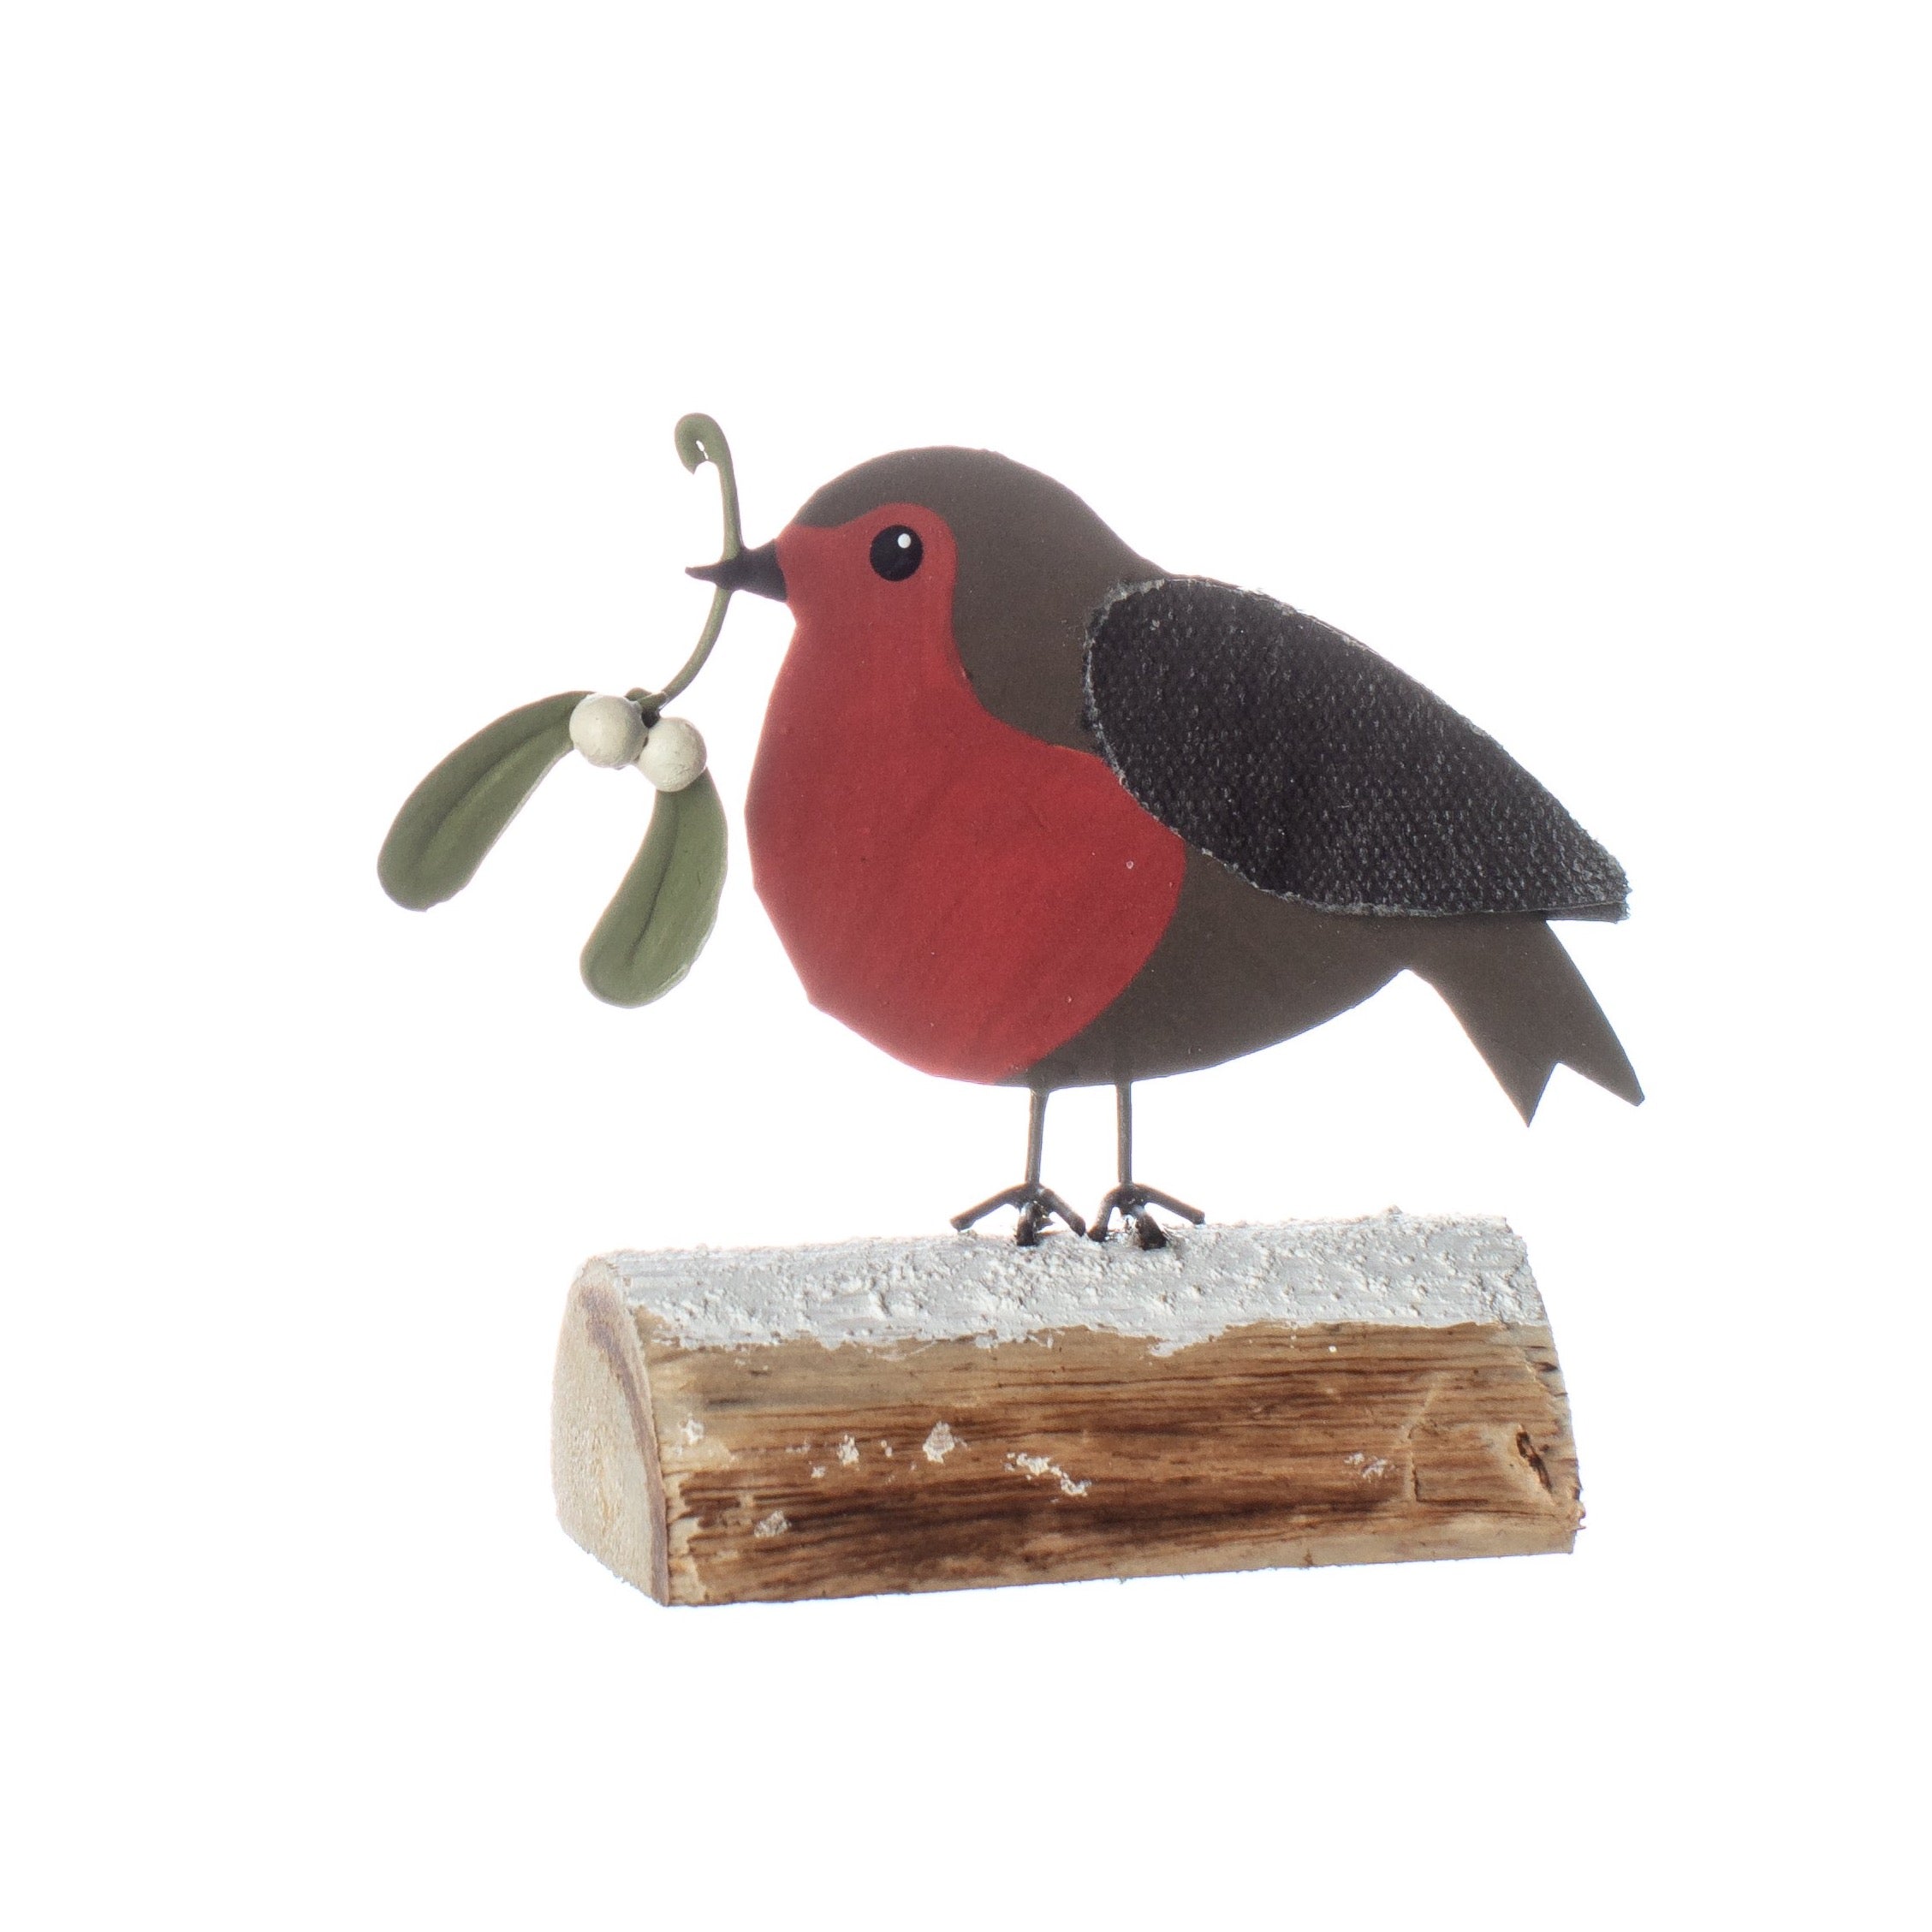 Mistletoe Robin On Log - The Nancy Smillie Shop - Art, Jewellery & Designer Gifts Glasgow